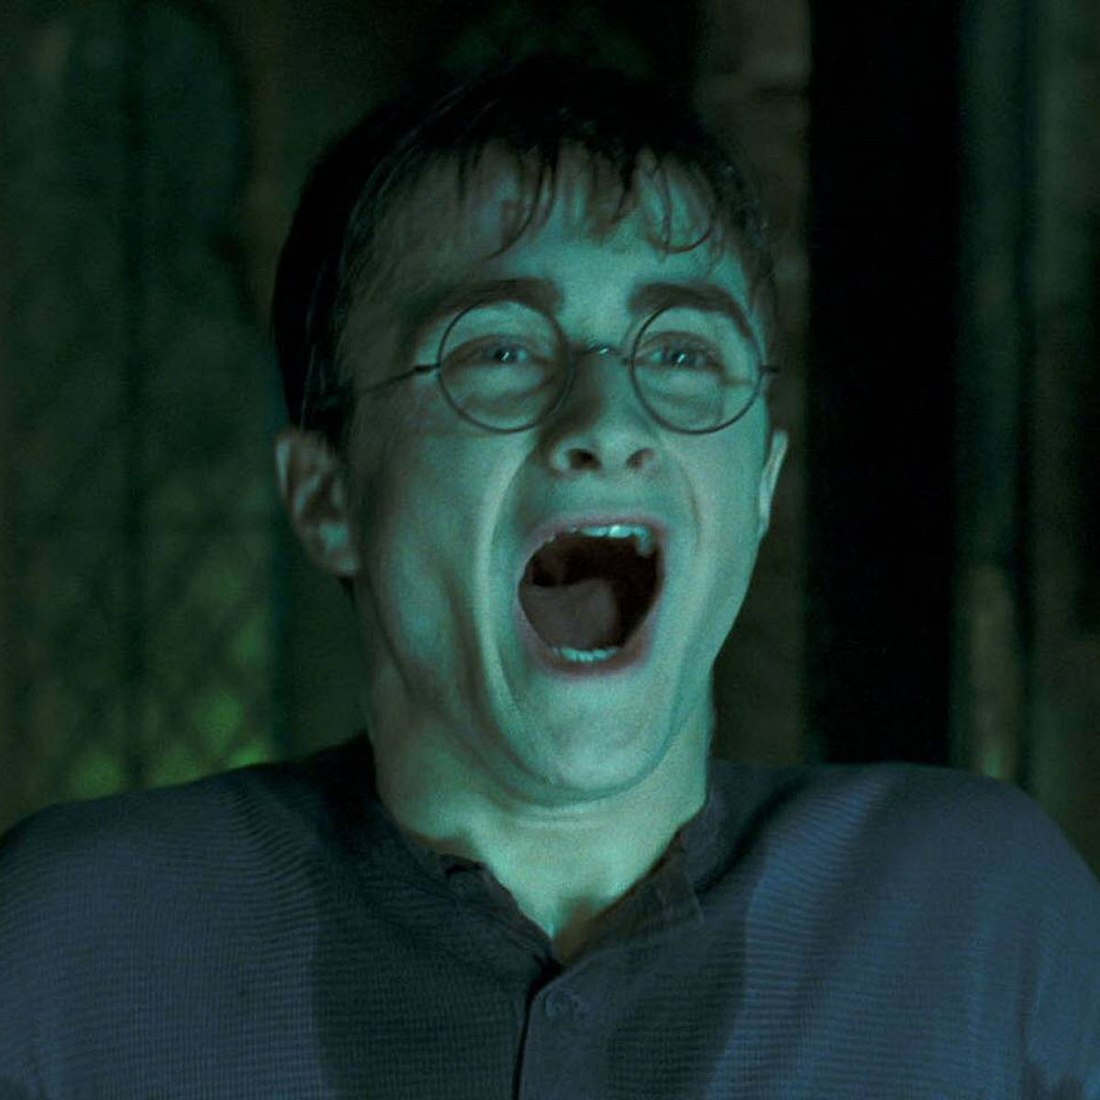 Harry Potter: Diese 4 Momente haben Fans gehasst!